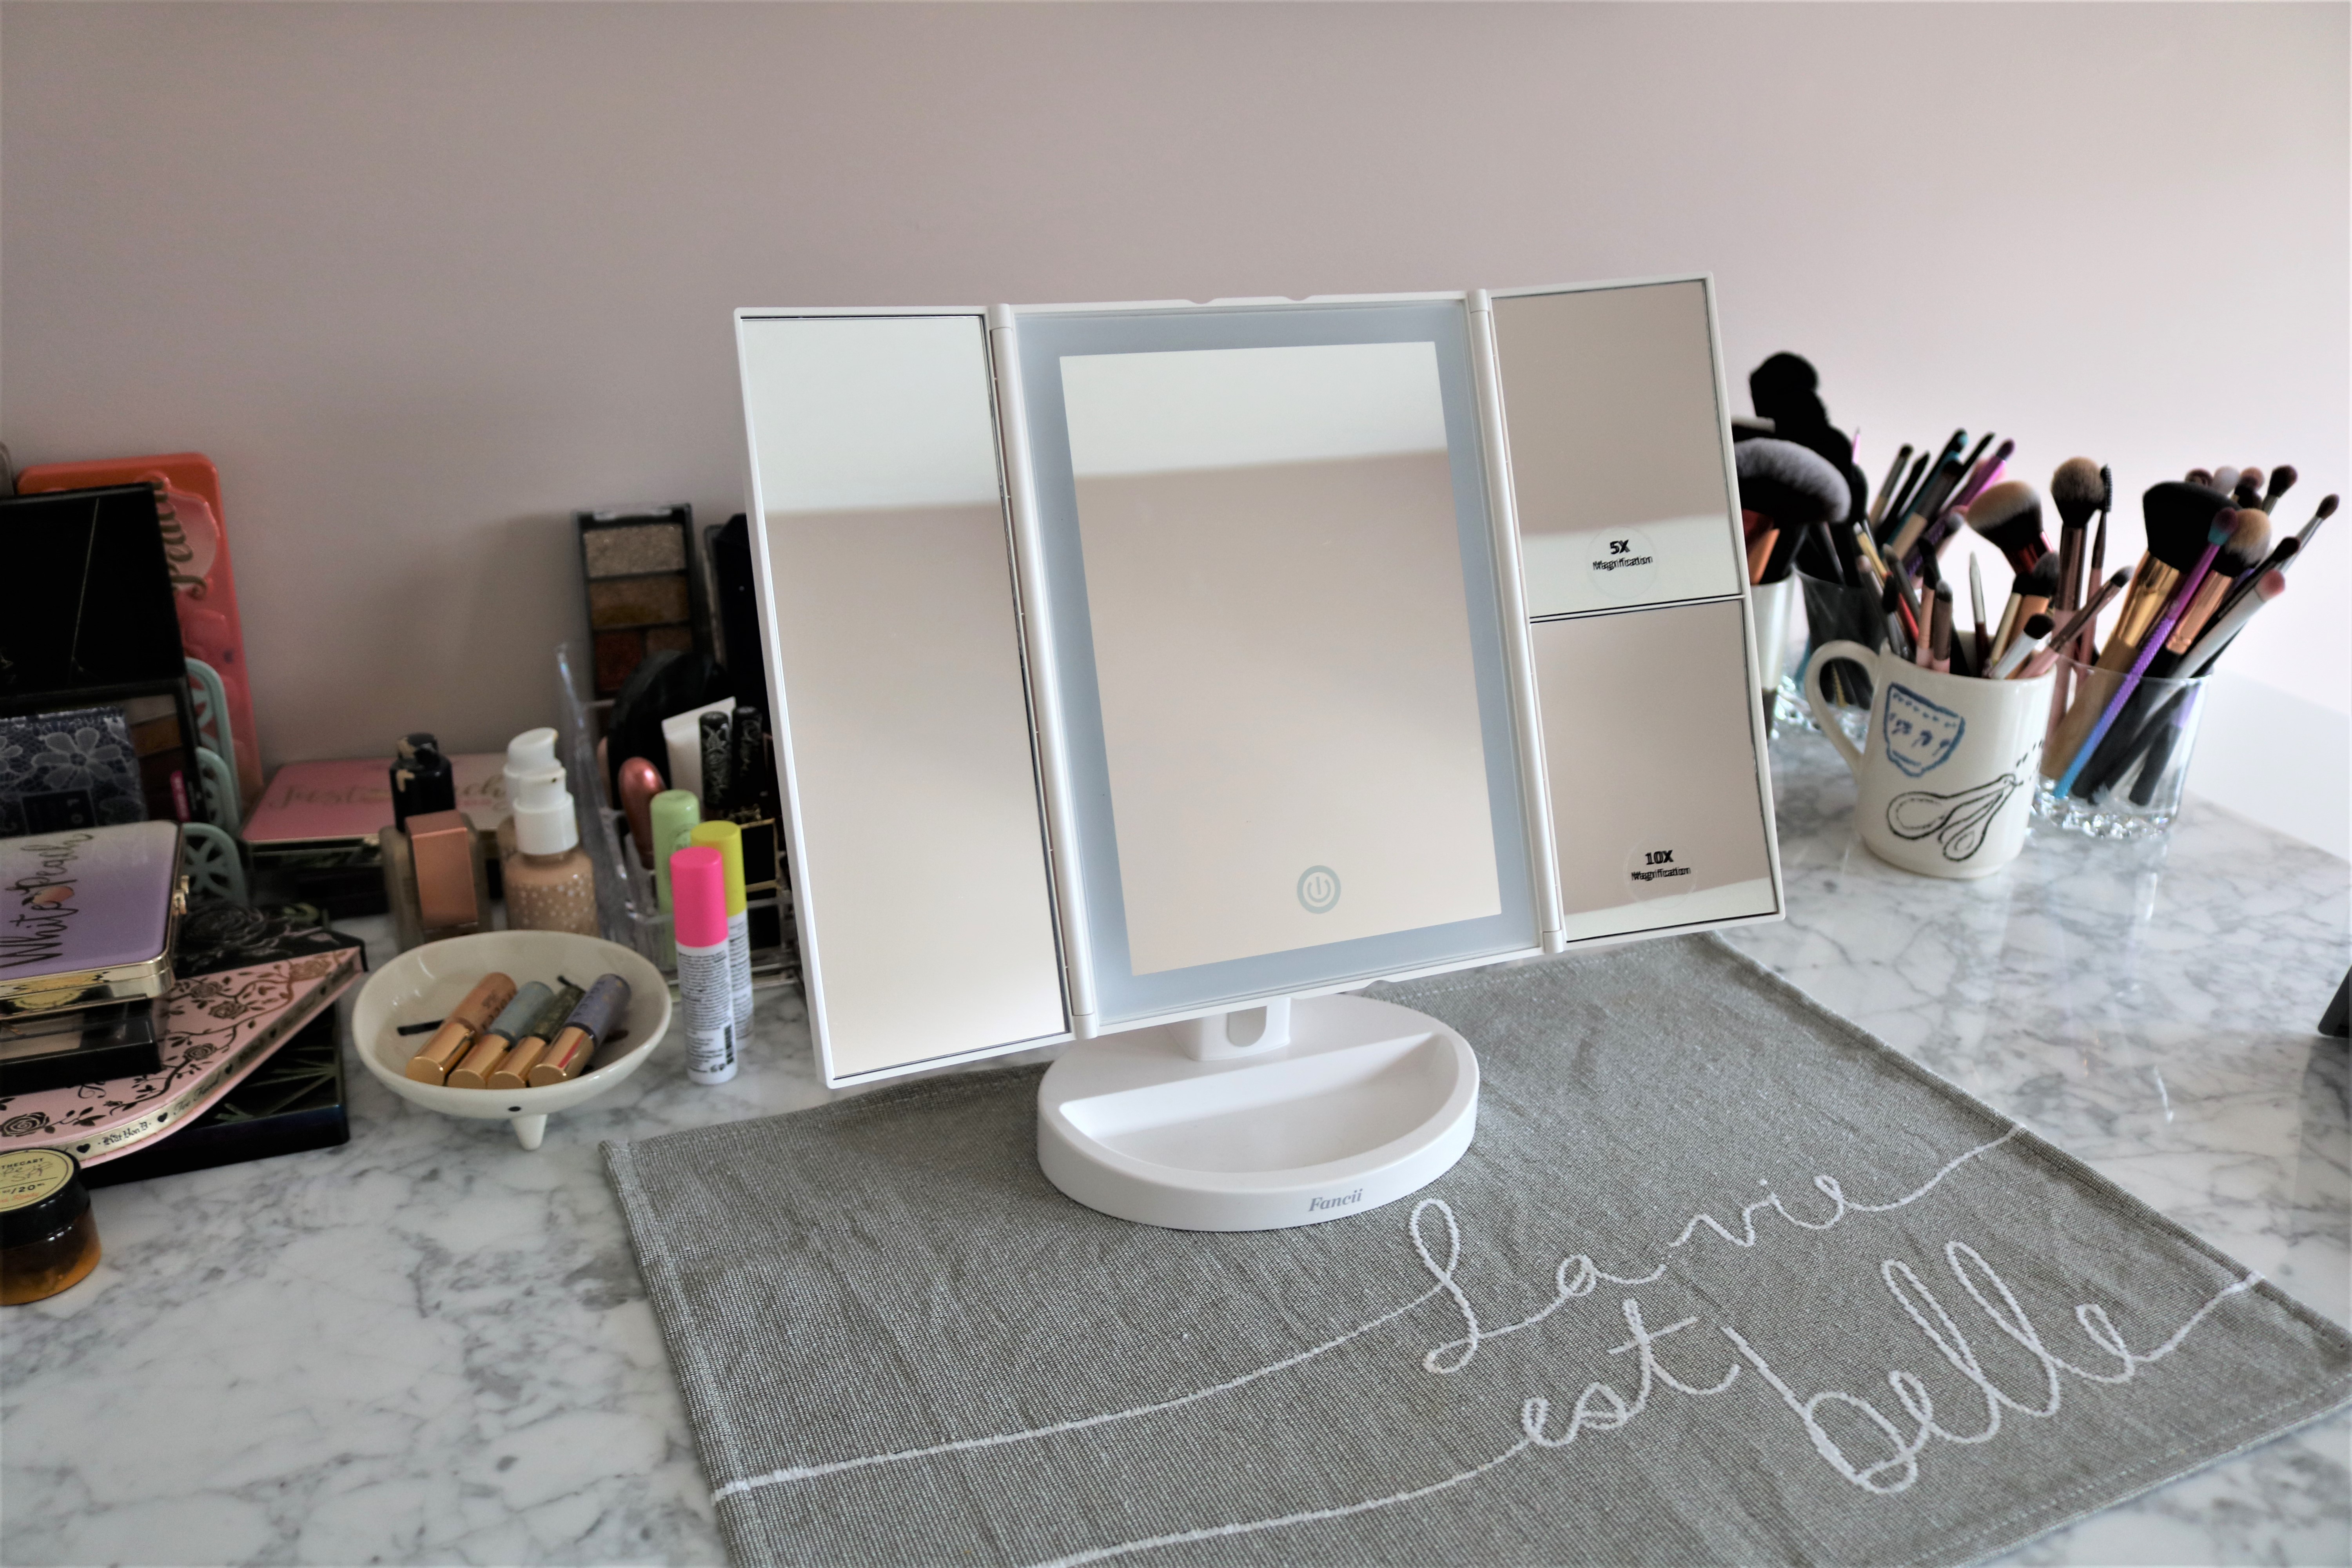 Review: Fancii Tria Tri-Fold Vanity Mirror - I'm Not a Beauty Guru